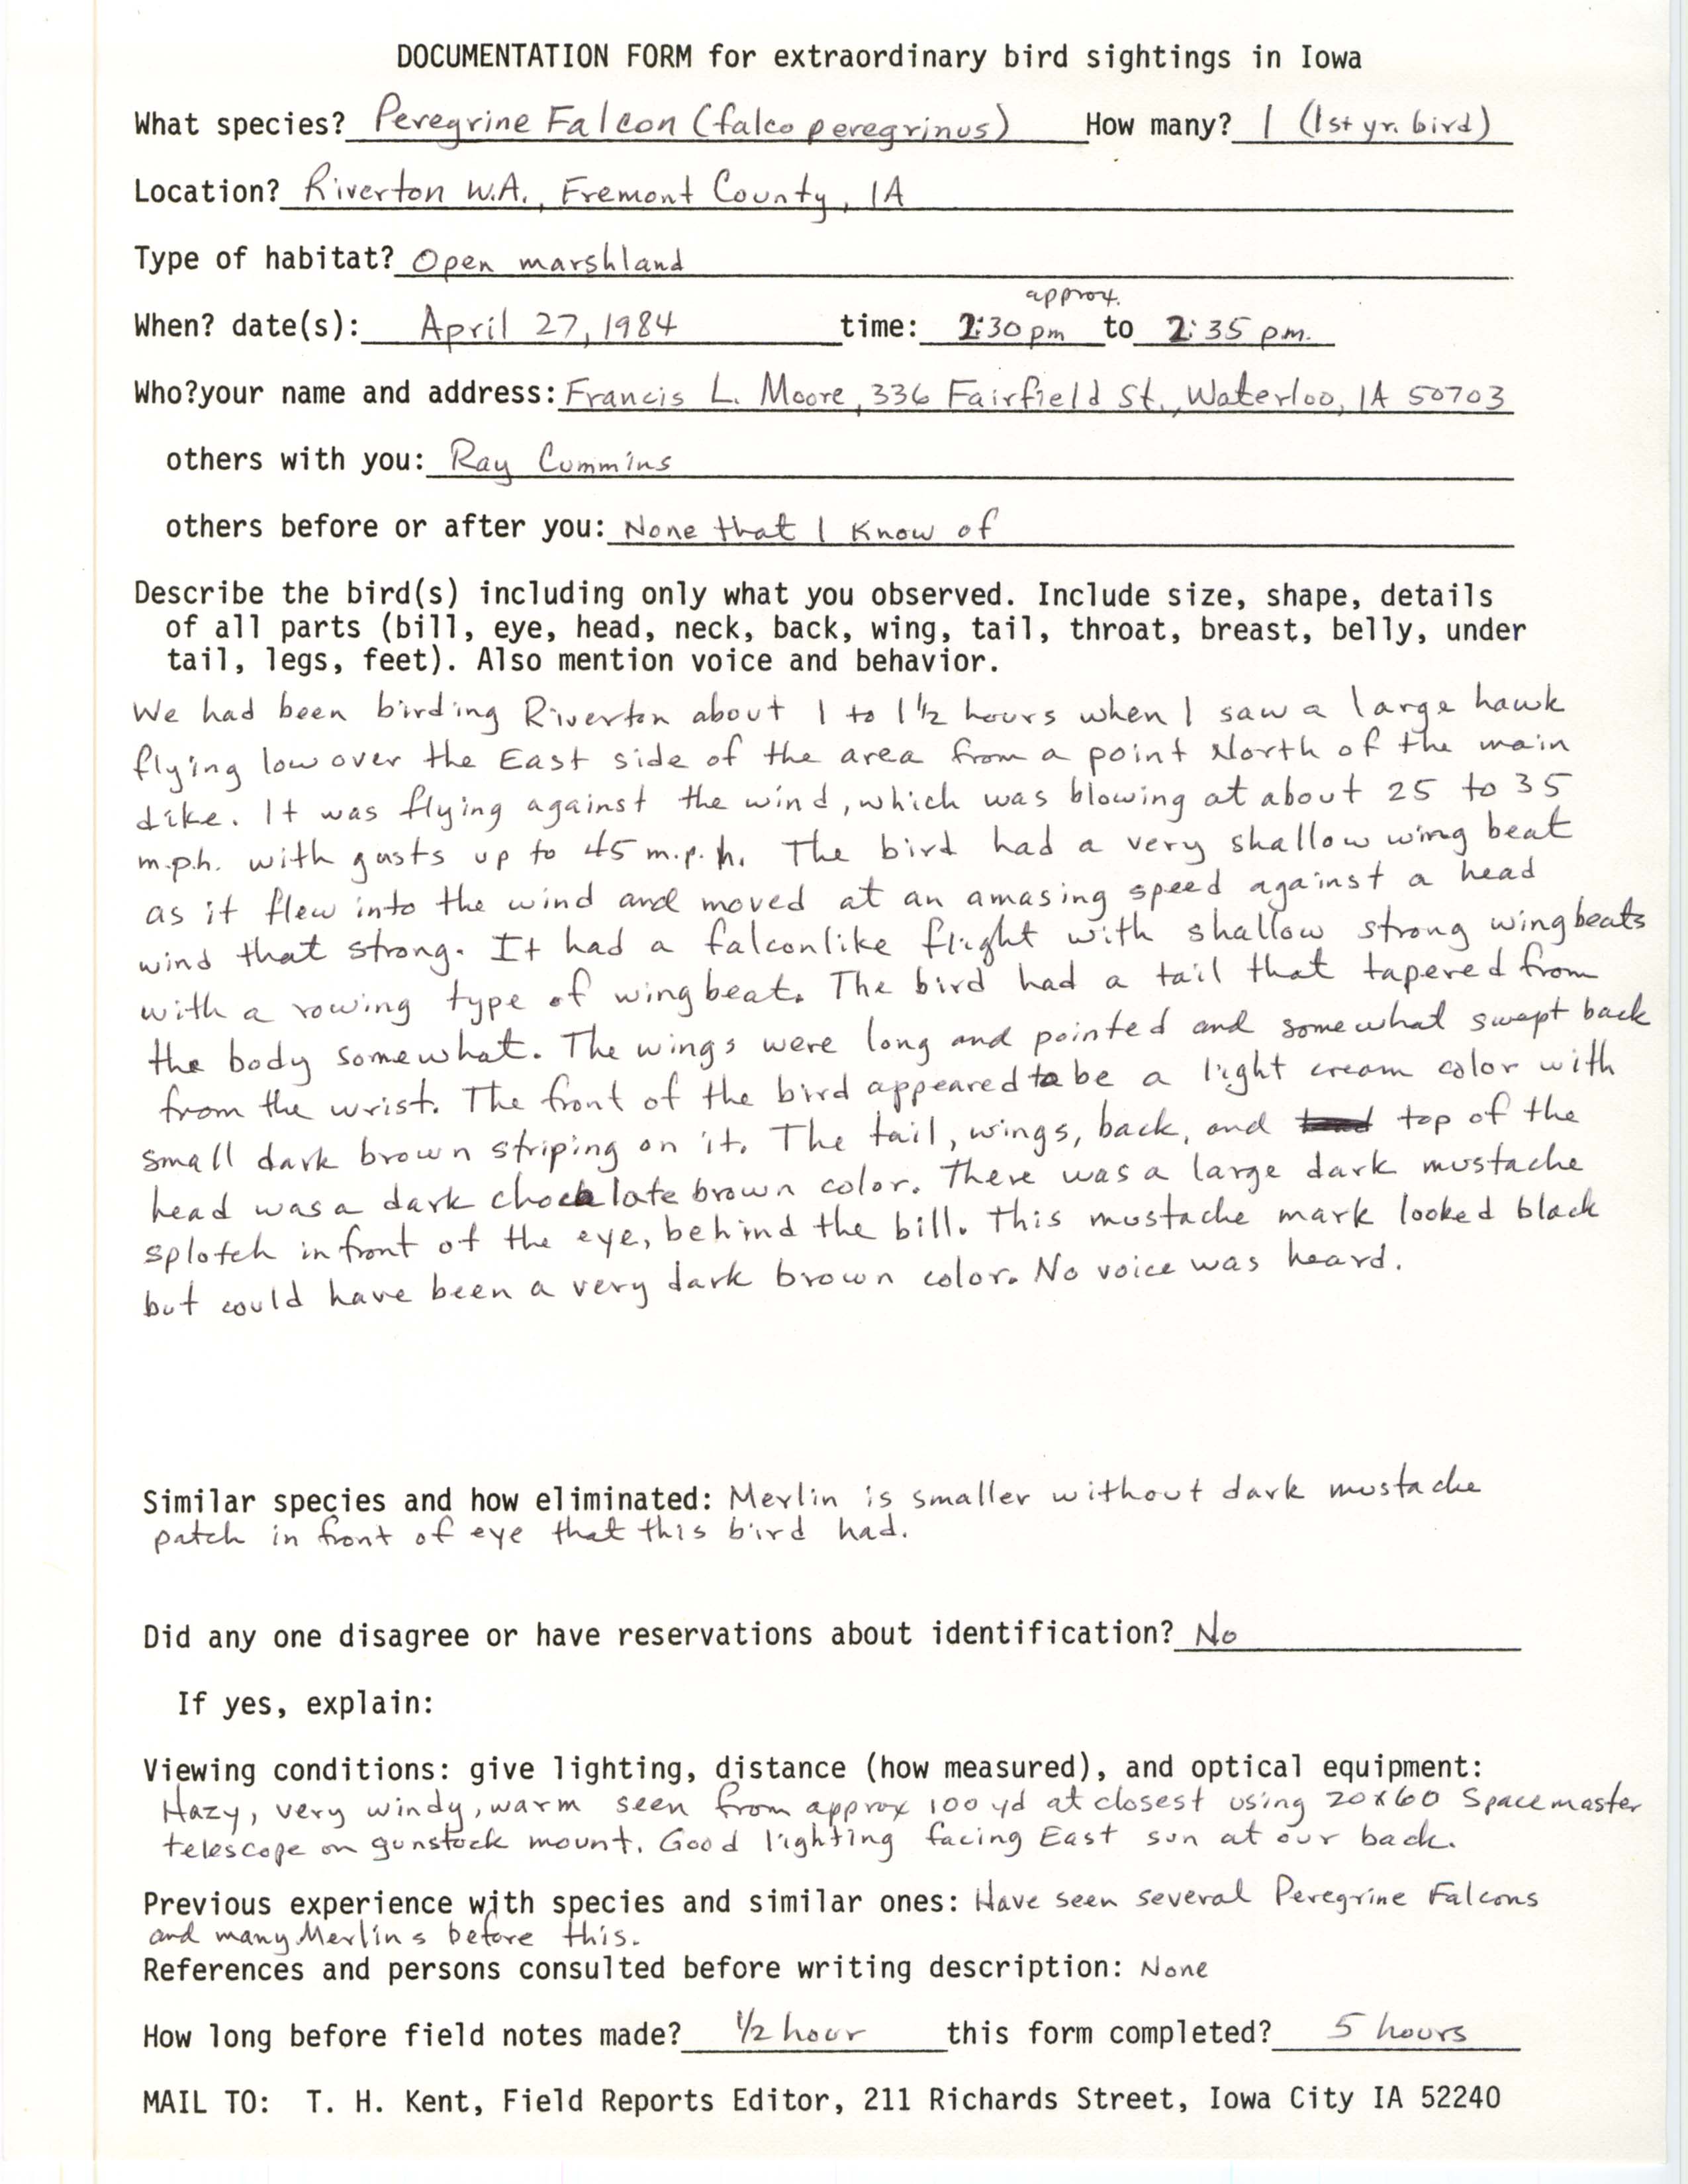 Rare bird documentation form for Peregrine Falcon at Riverton Wildlife Area, 1984